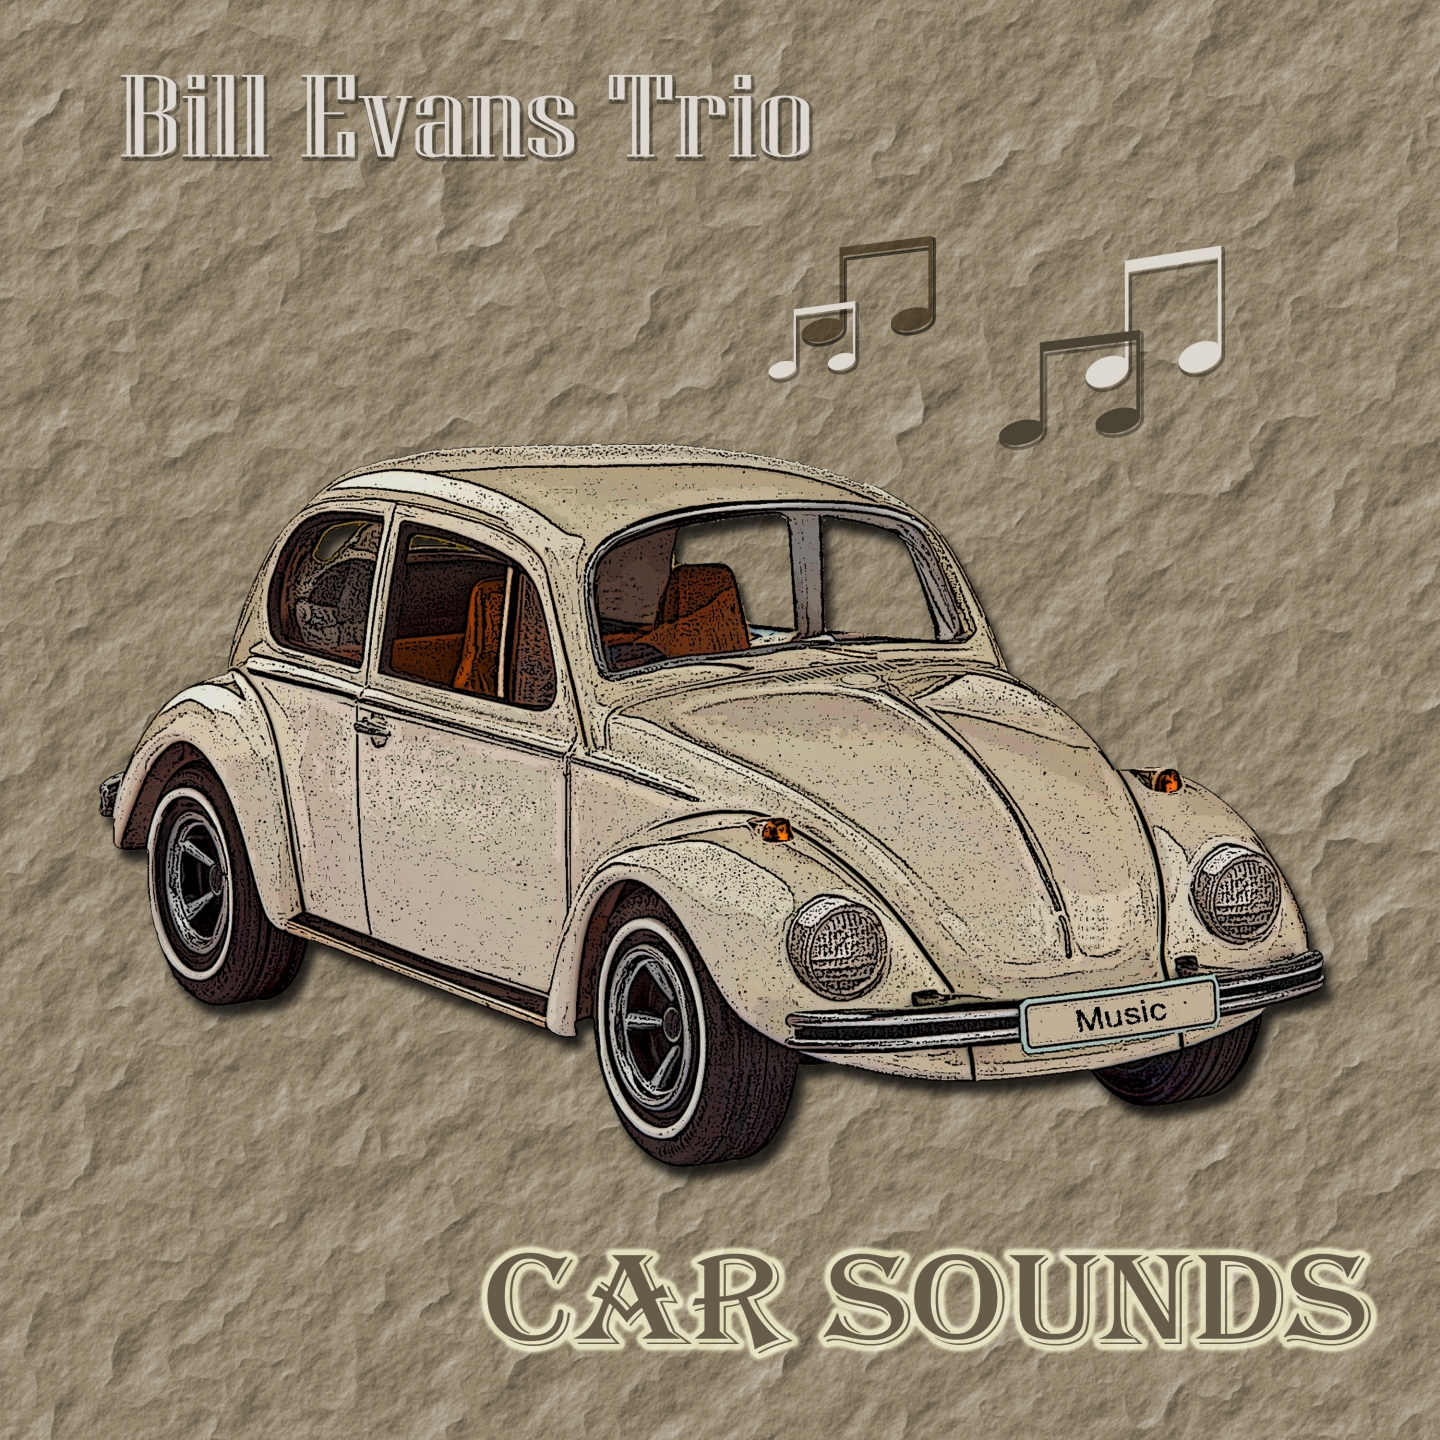 Car Sounds